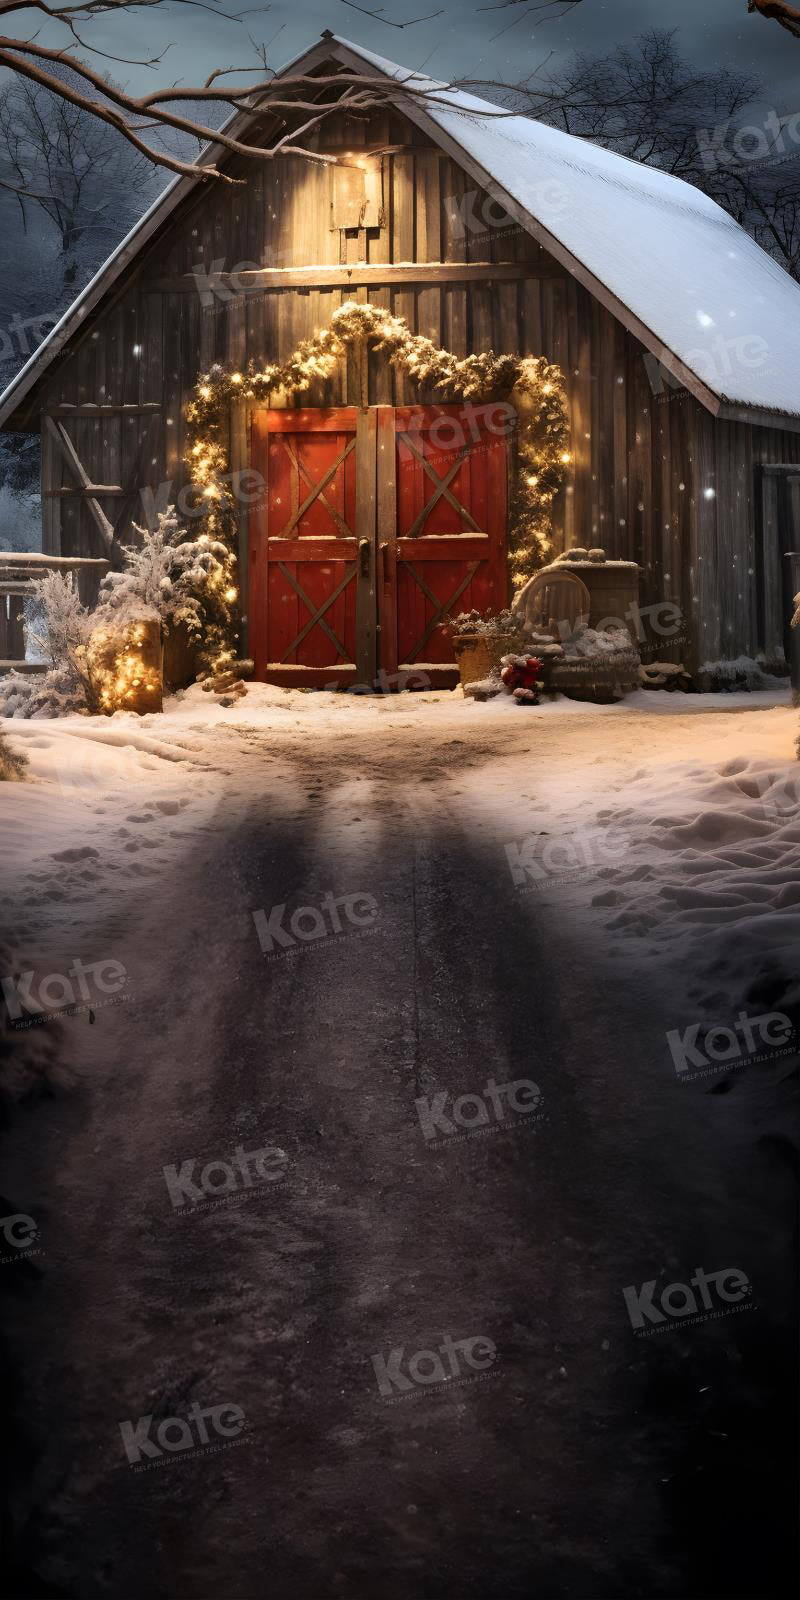 Kate Sweep Christmas Red Barn Night Backdrop for Photography